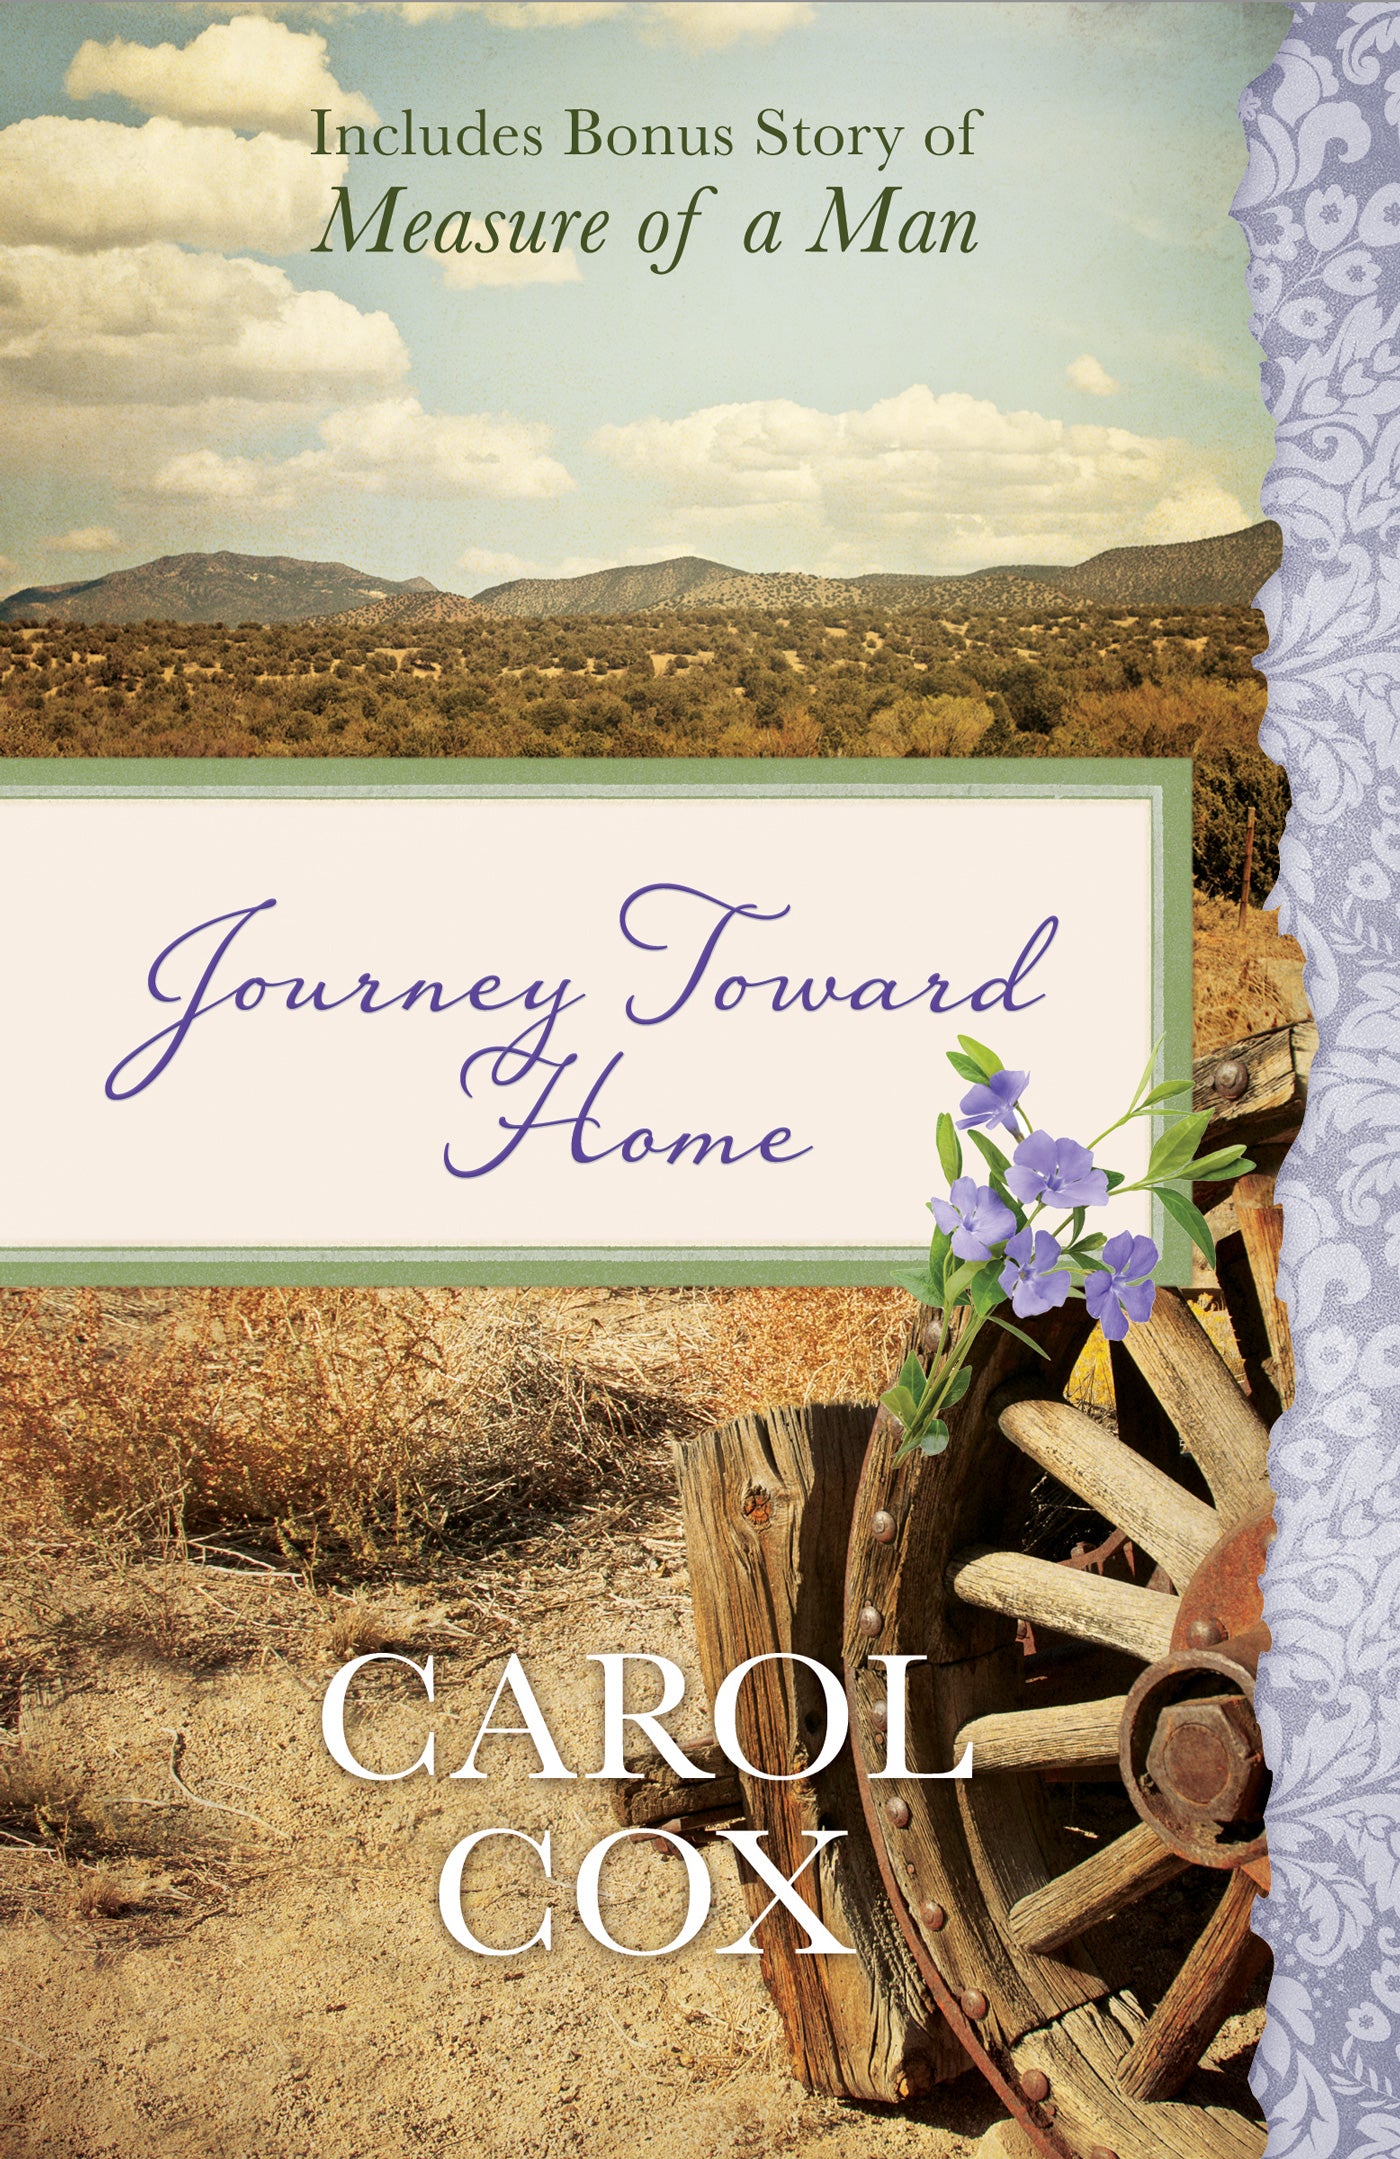 Journey Toward Home - The Christian Gift Company